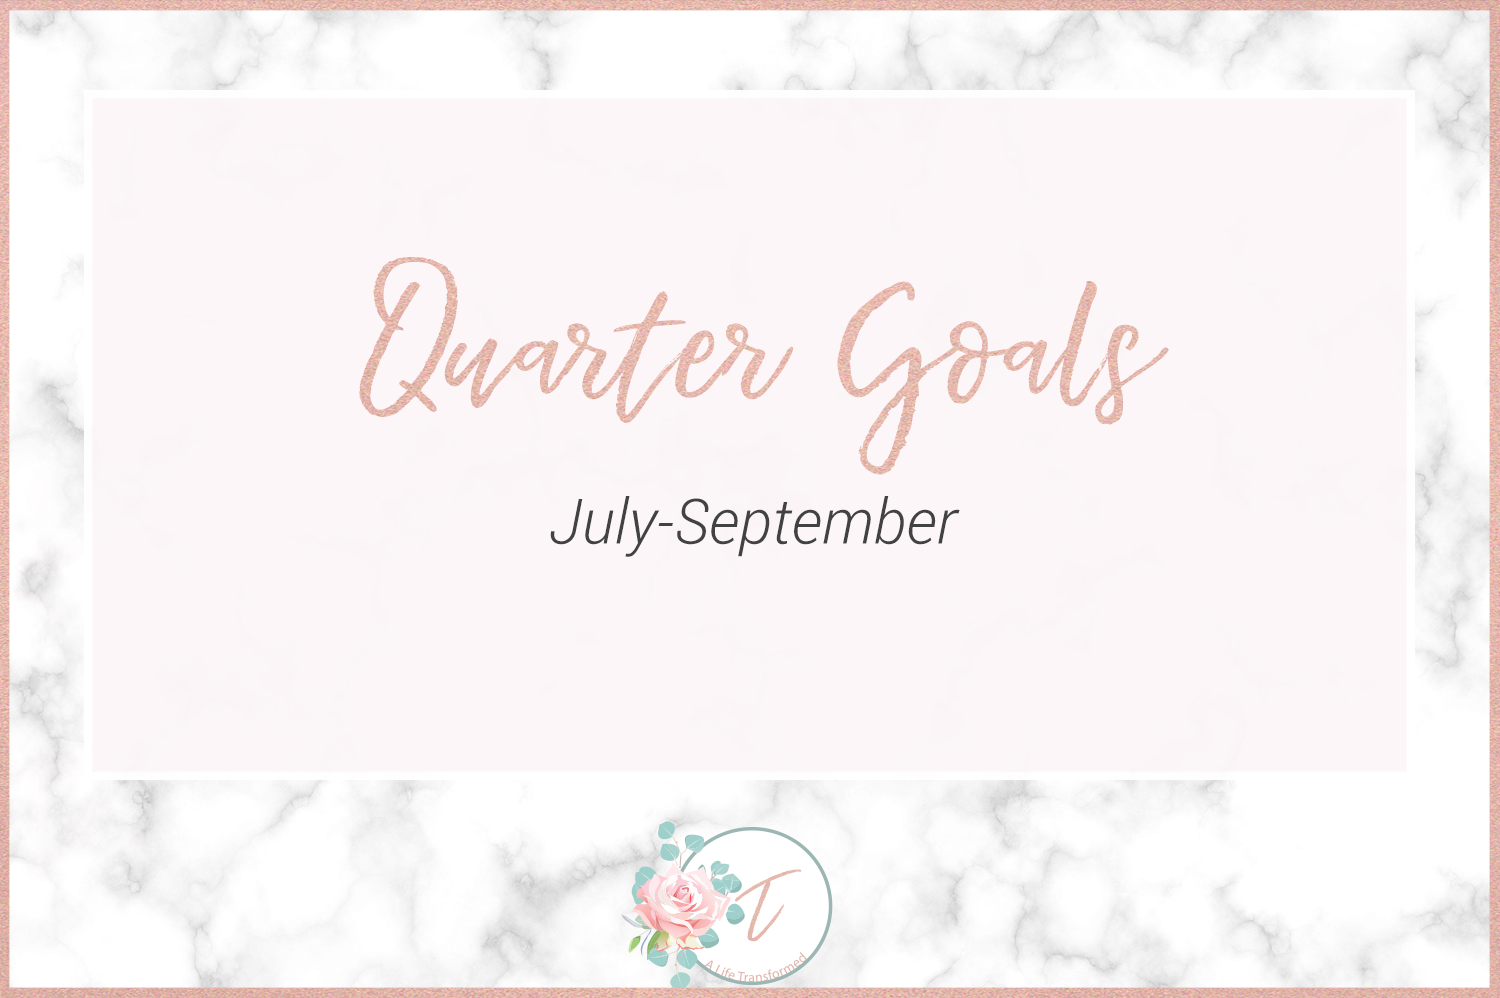 Quarterly-Goals-July-to-September